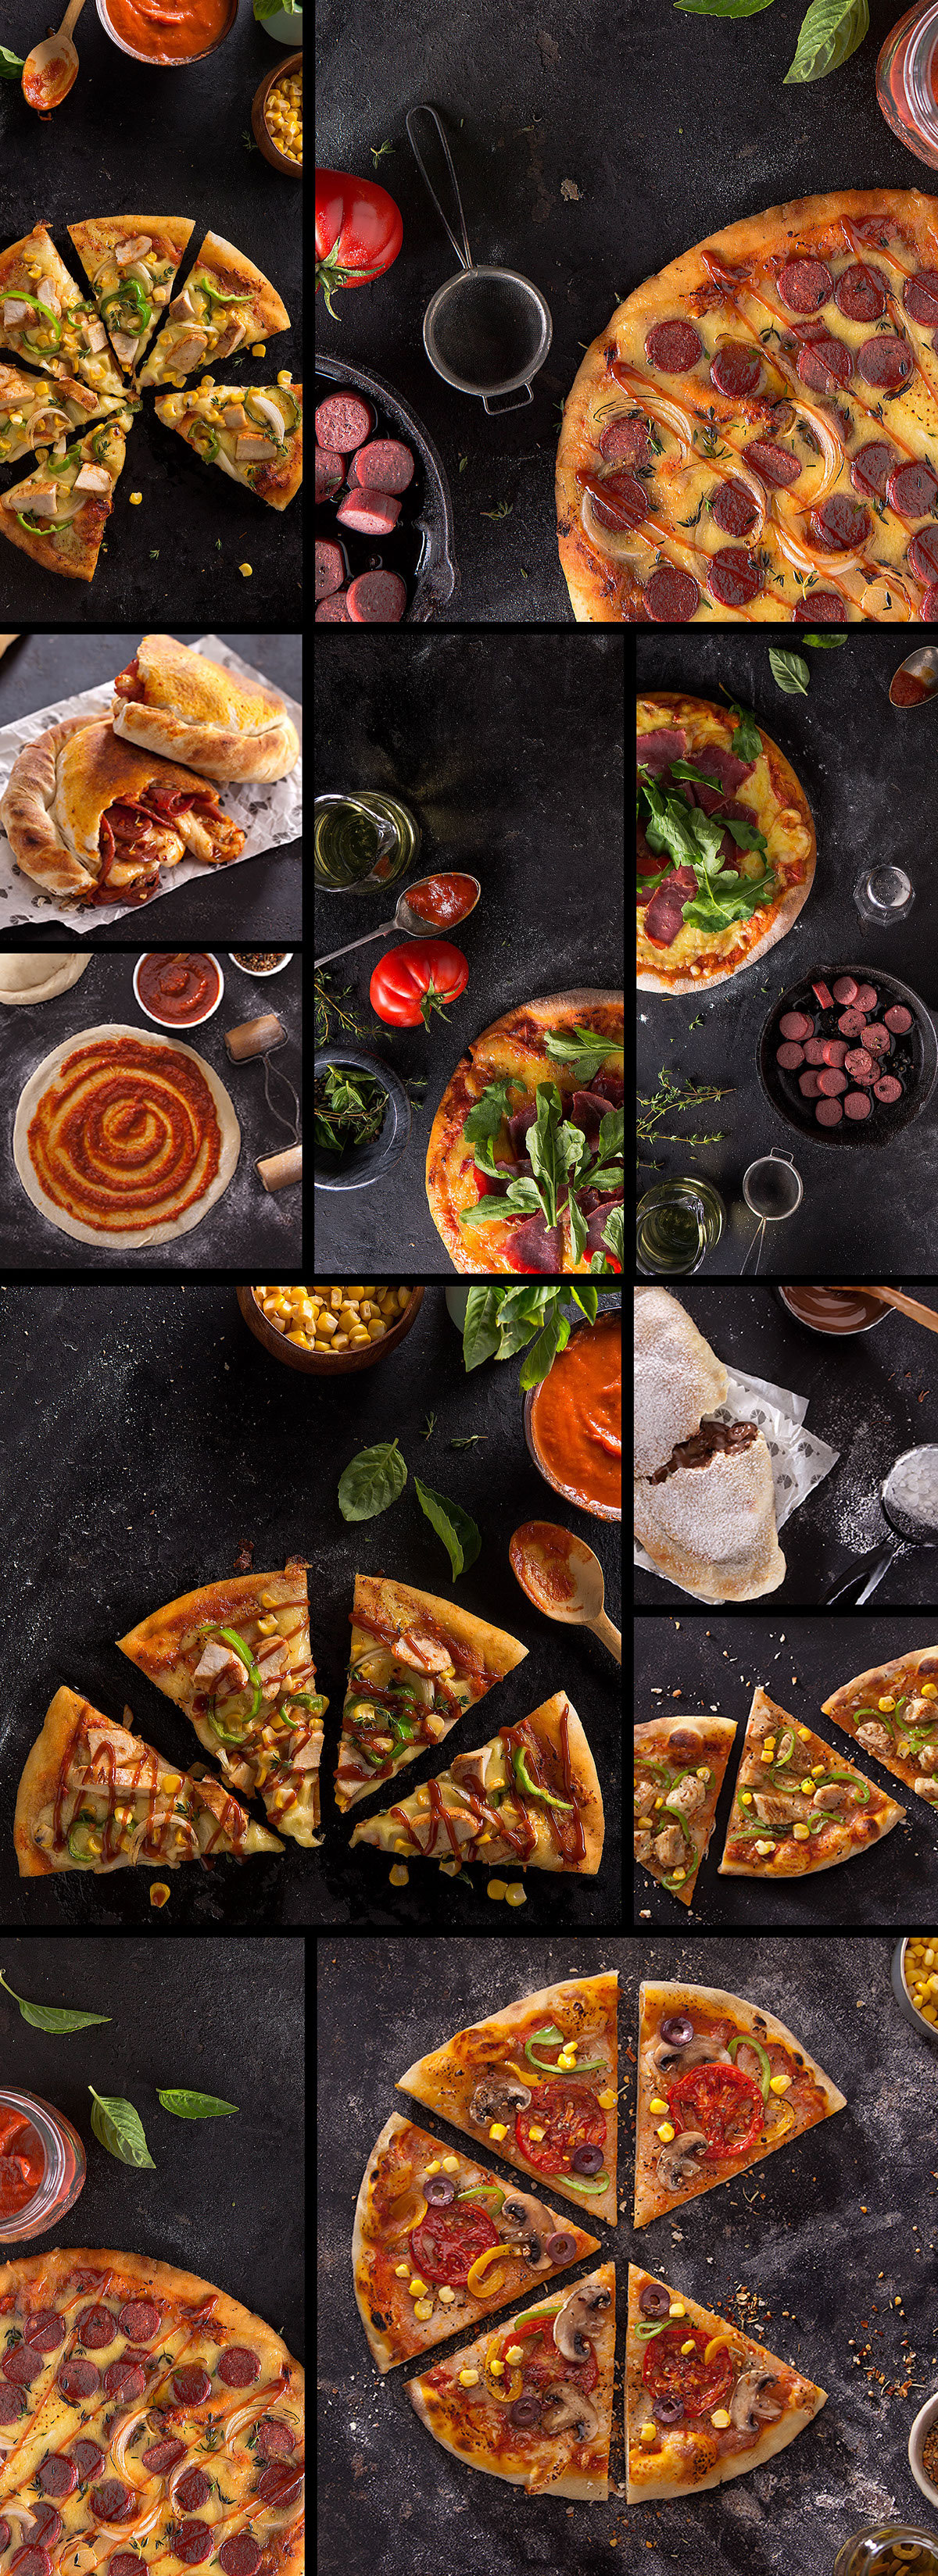 Pizza crust photo shoot vegeterian beef chicken pizzaria resturant social media posts uniform oven wood fire healthy